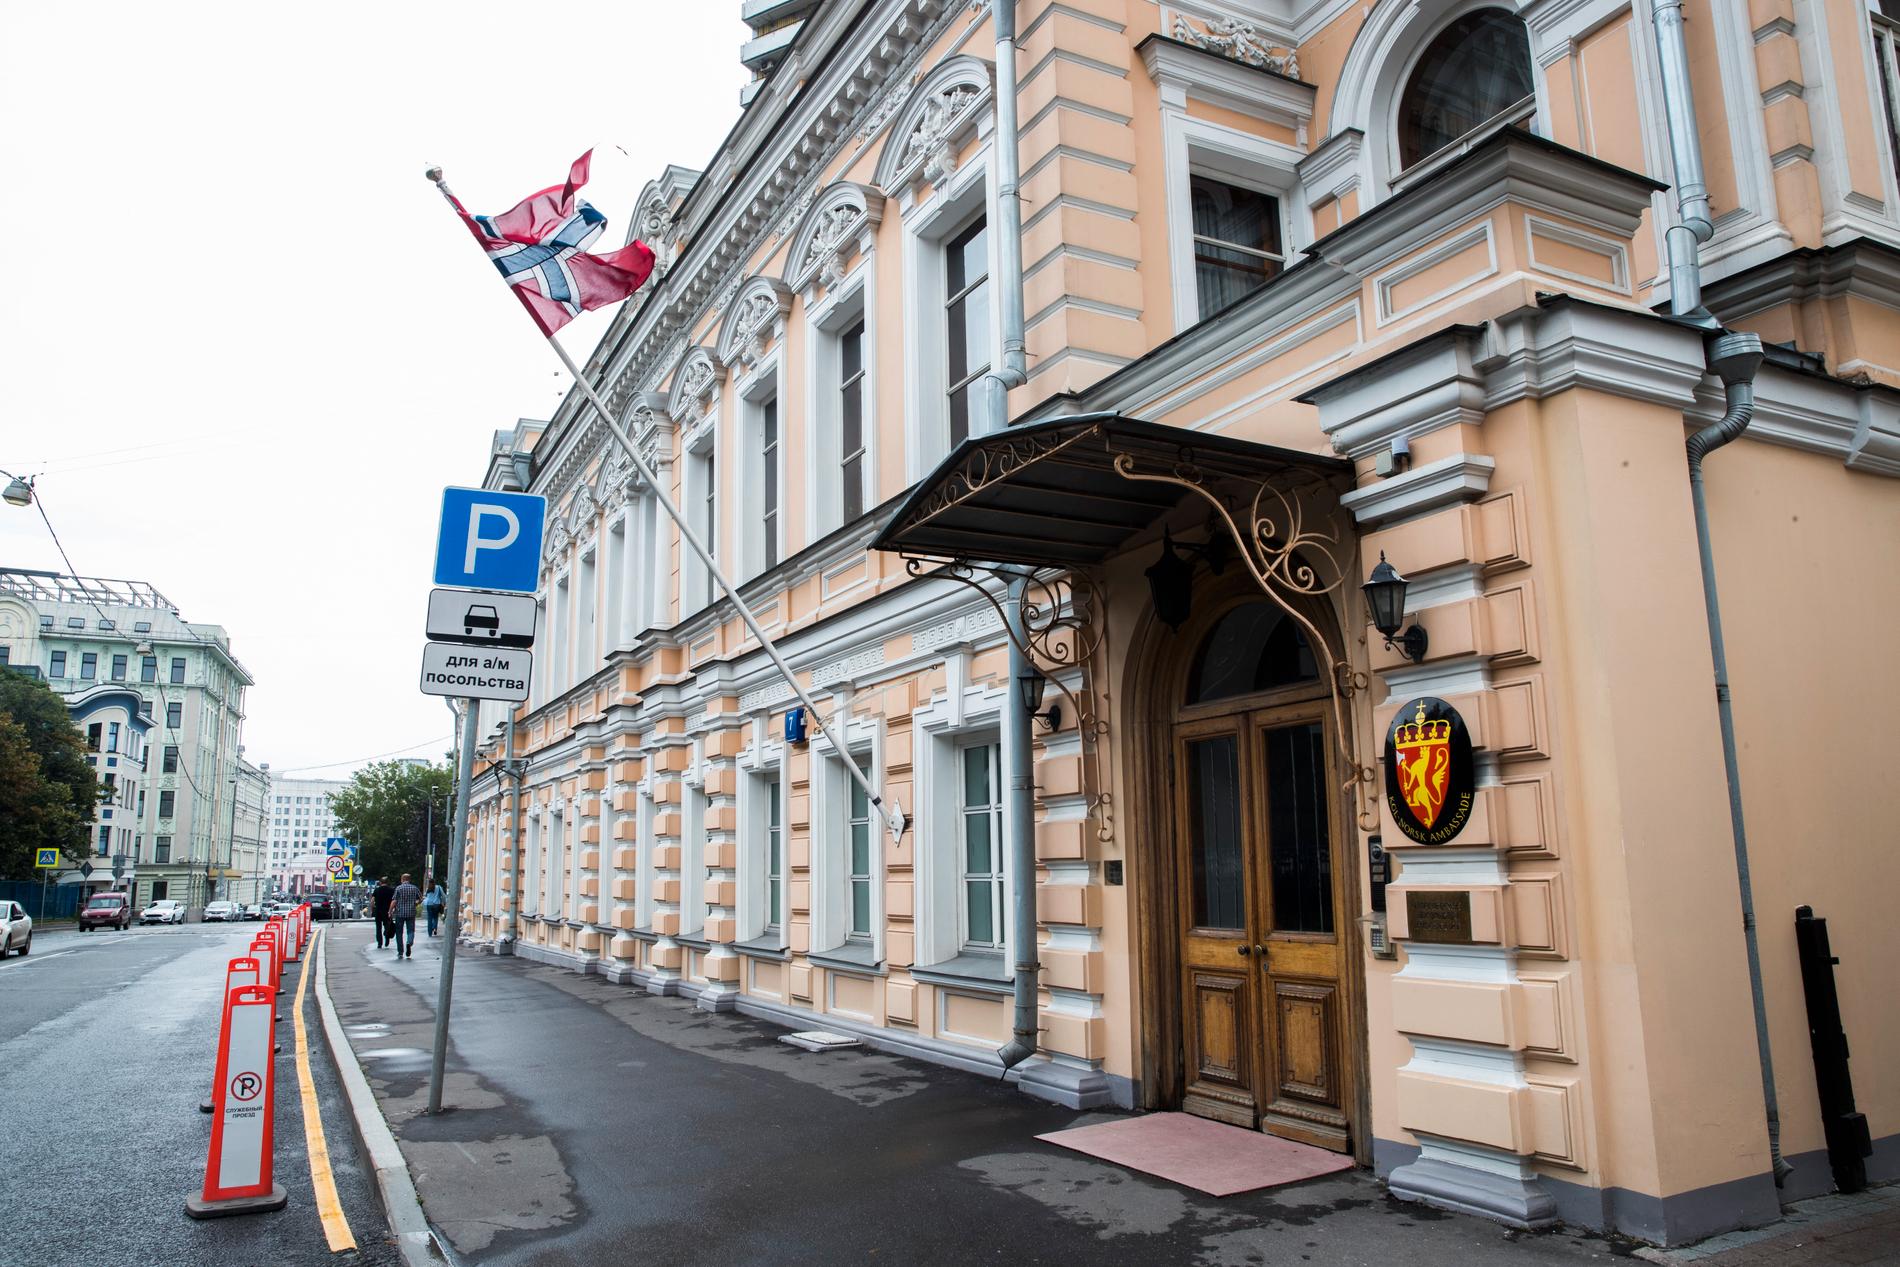 Norges ambassadør i Moskva blir nå kalt inn på teppet til russisk UD. Foto: Berit Roald / NTB scanpix